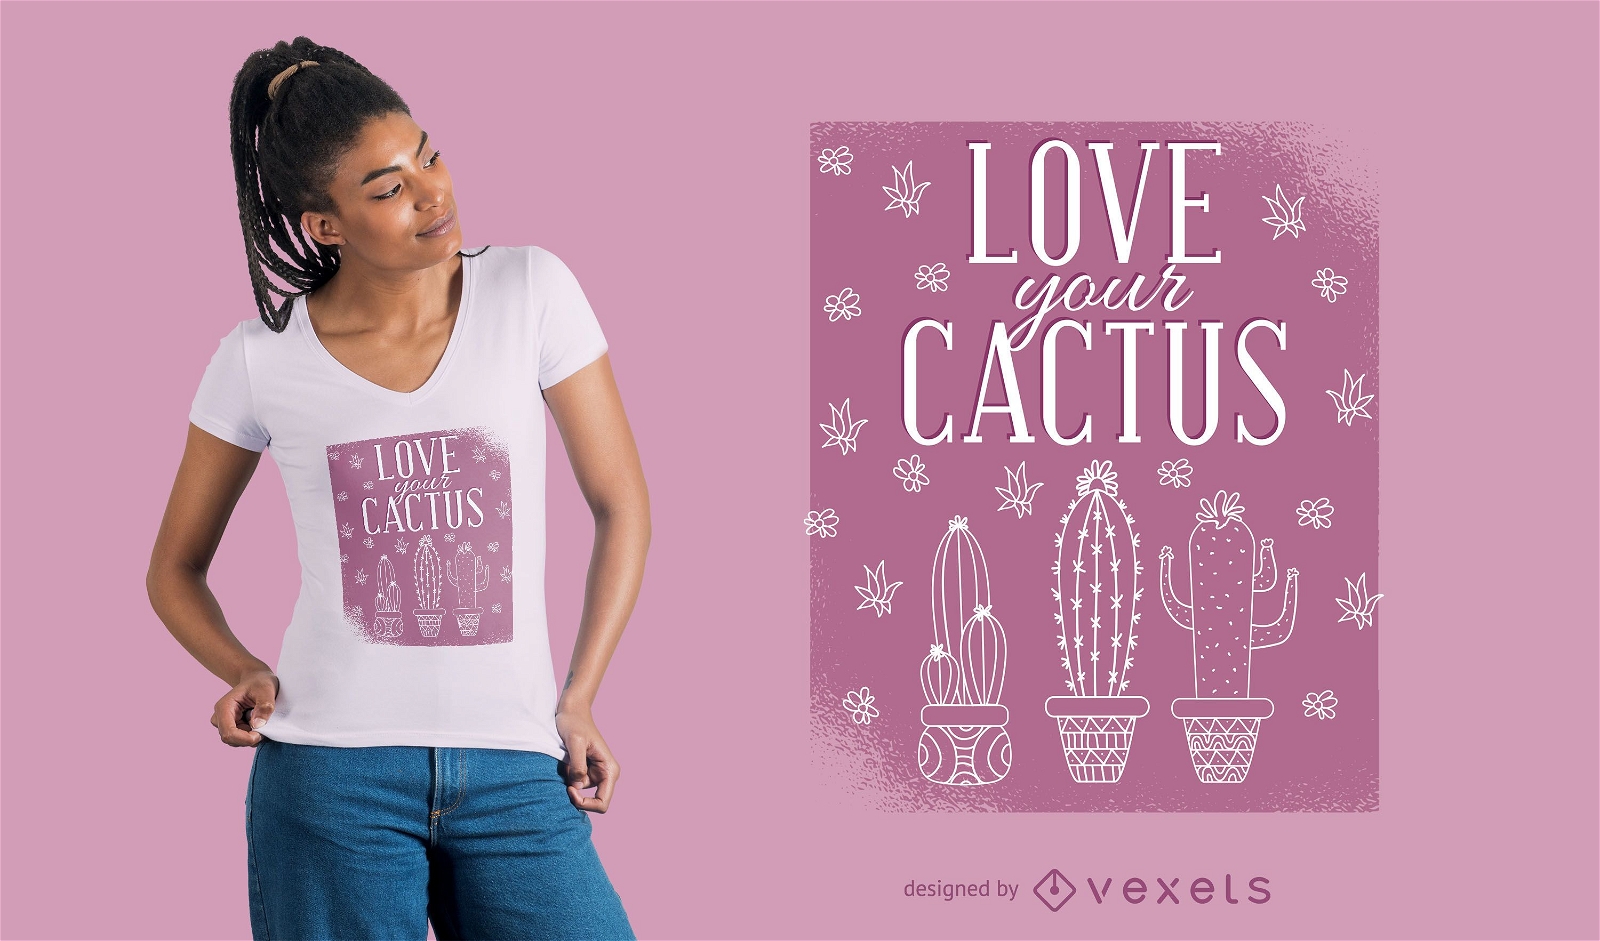 Love your cactus t-shirt design